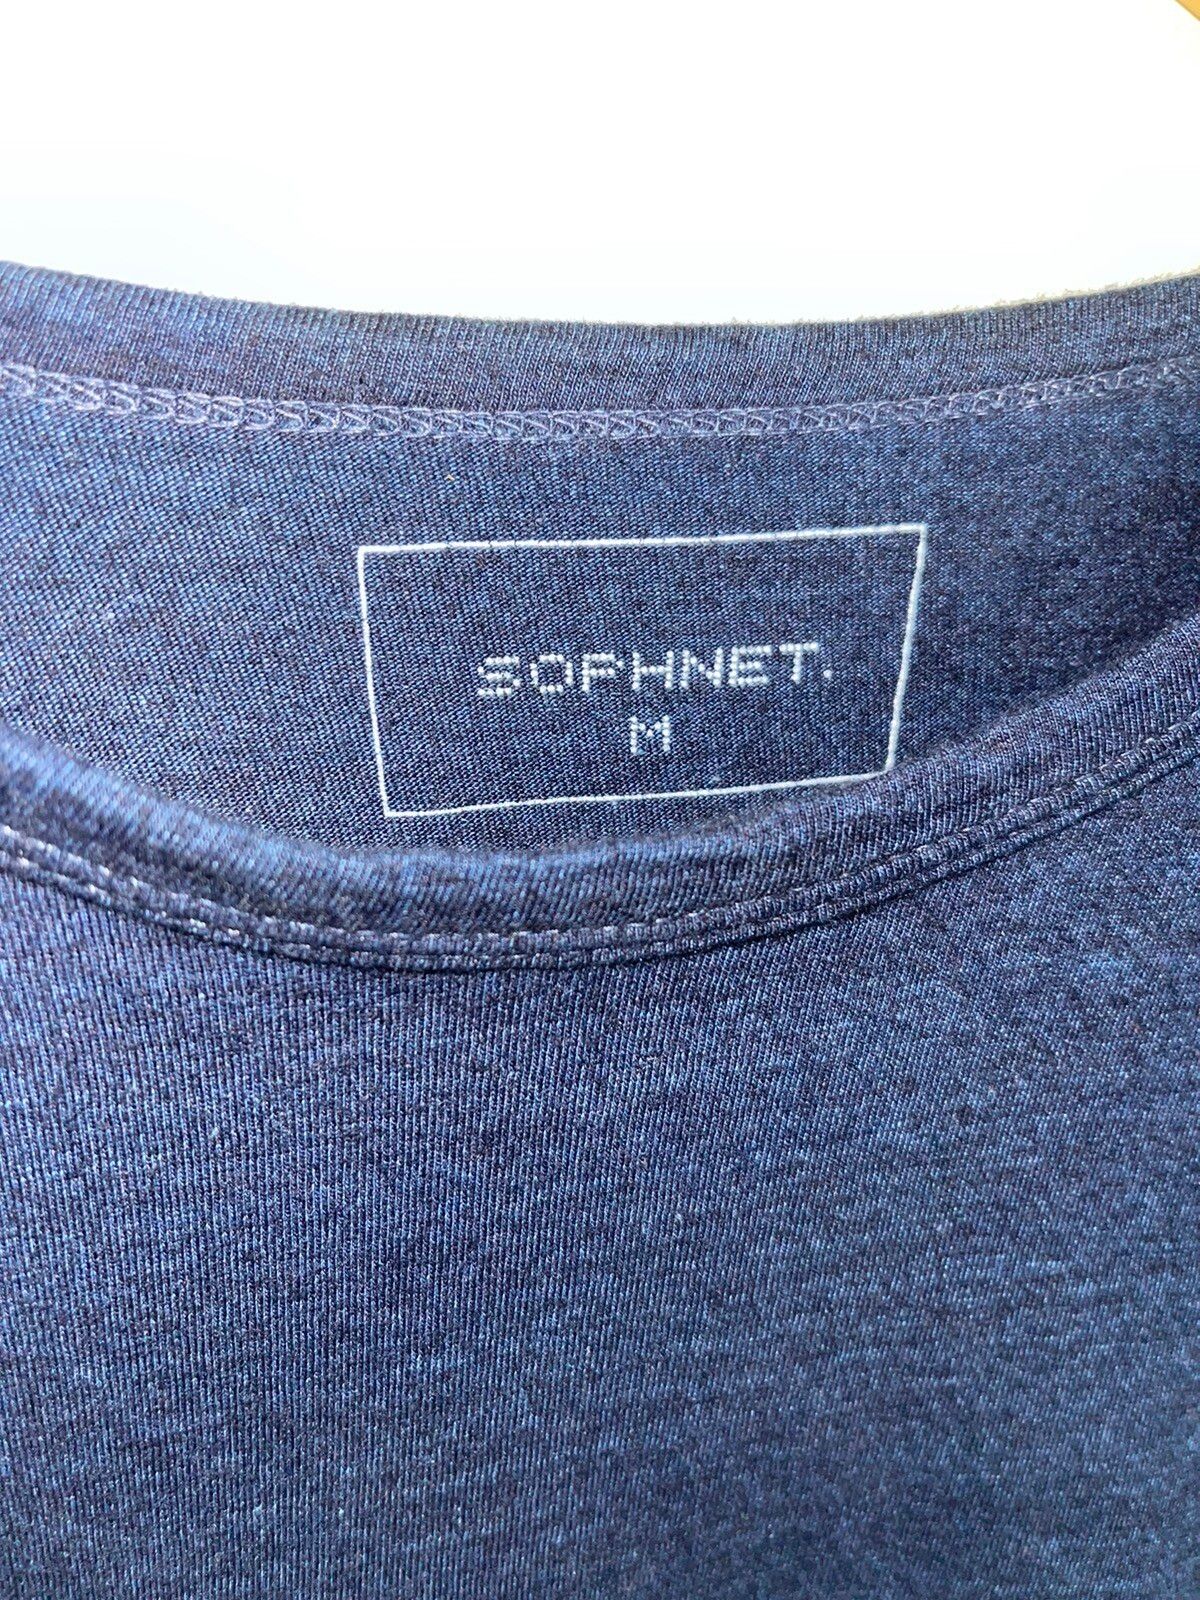 Sophnet. Sophnet Side Panel Tee Size US M / EU 48-50 / 2 - 4 Thumbnail